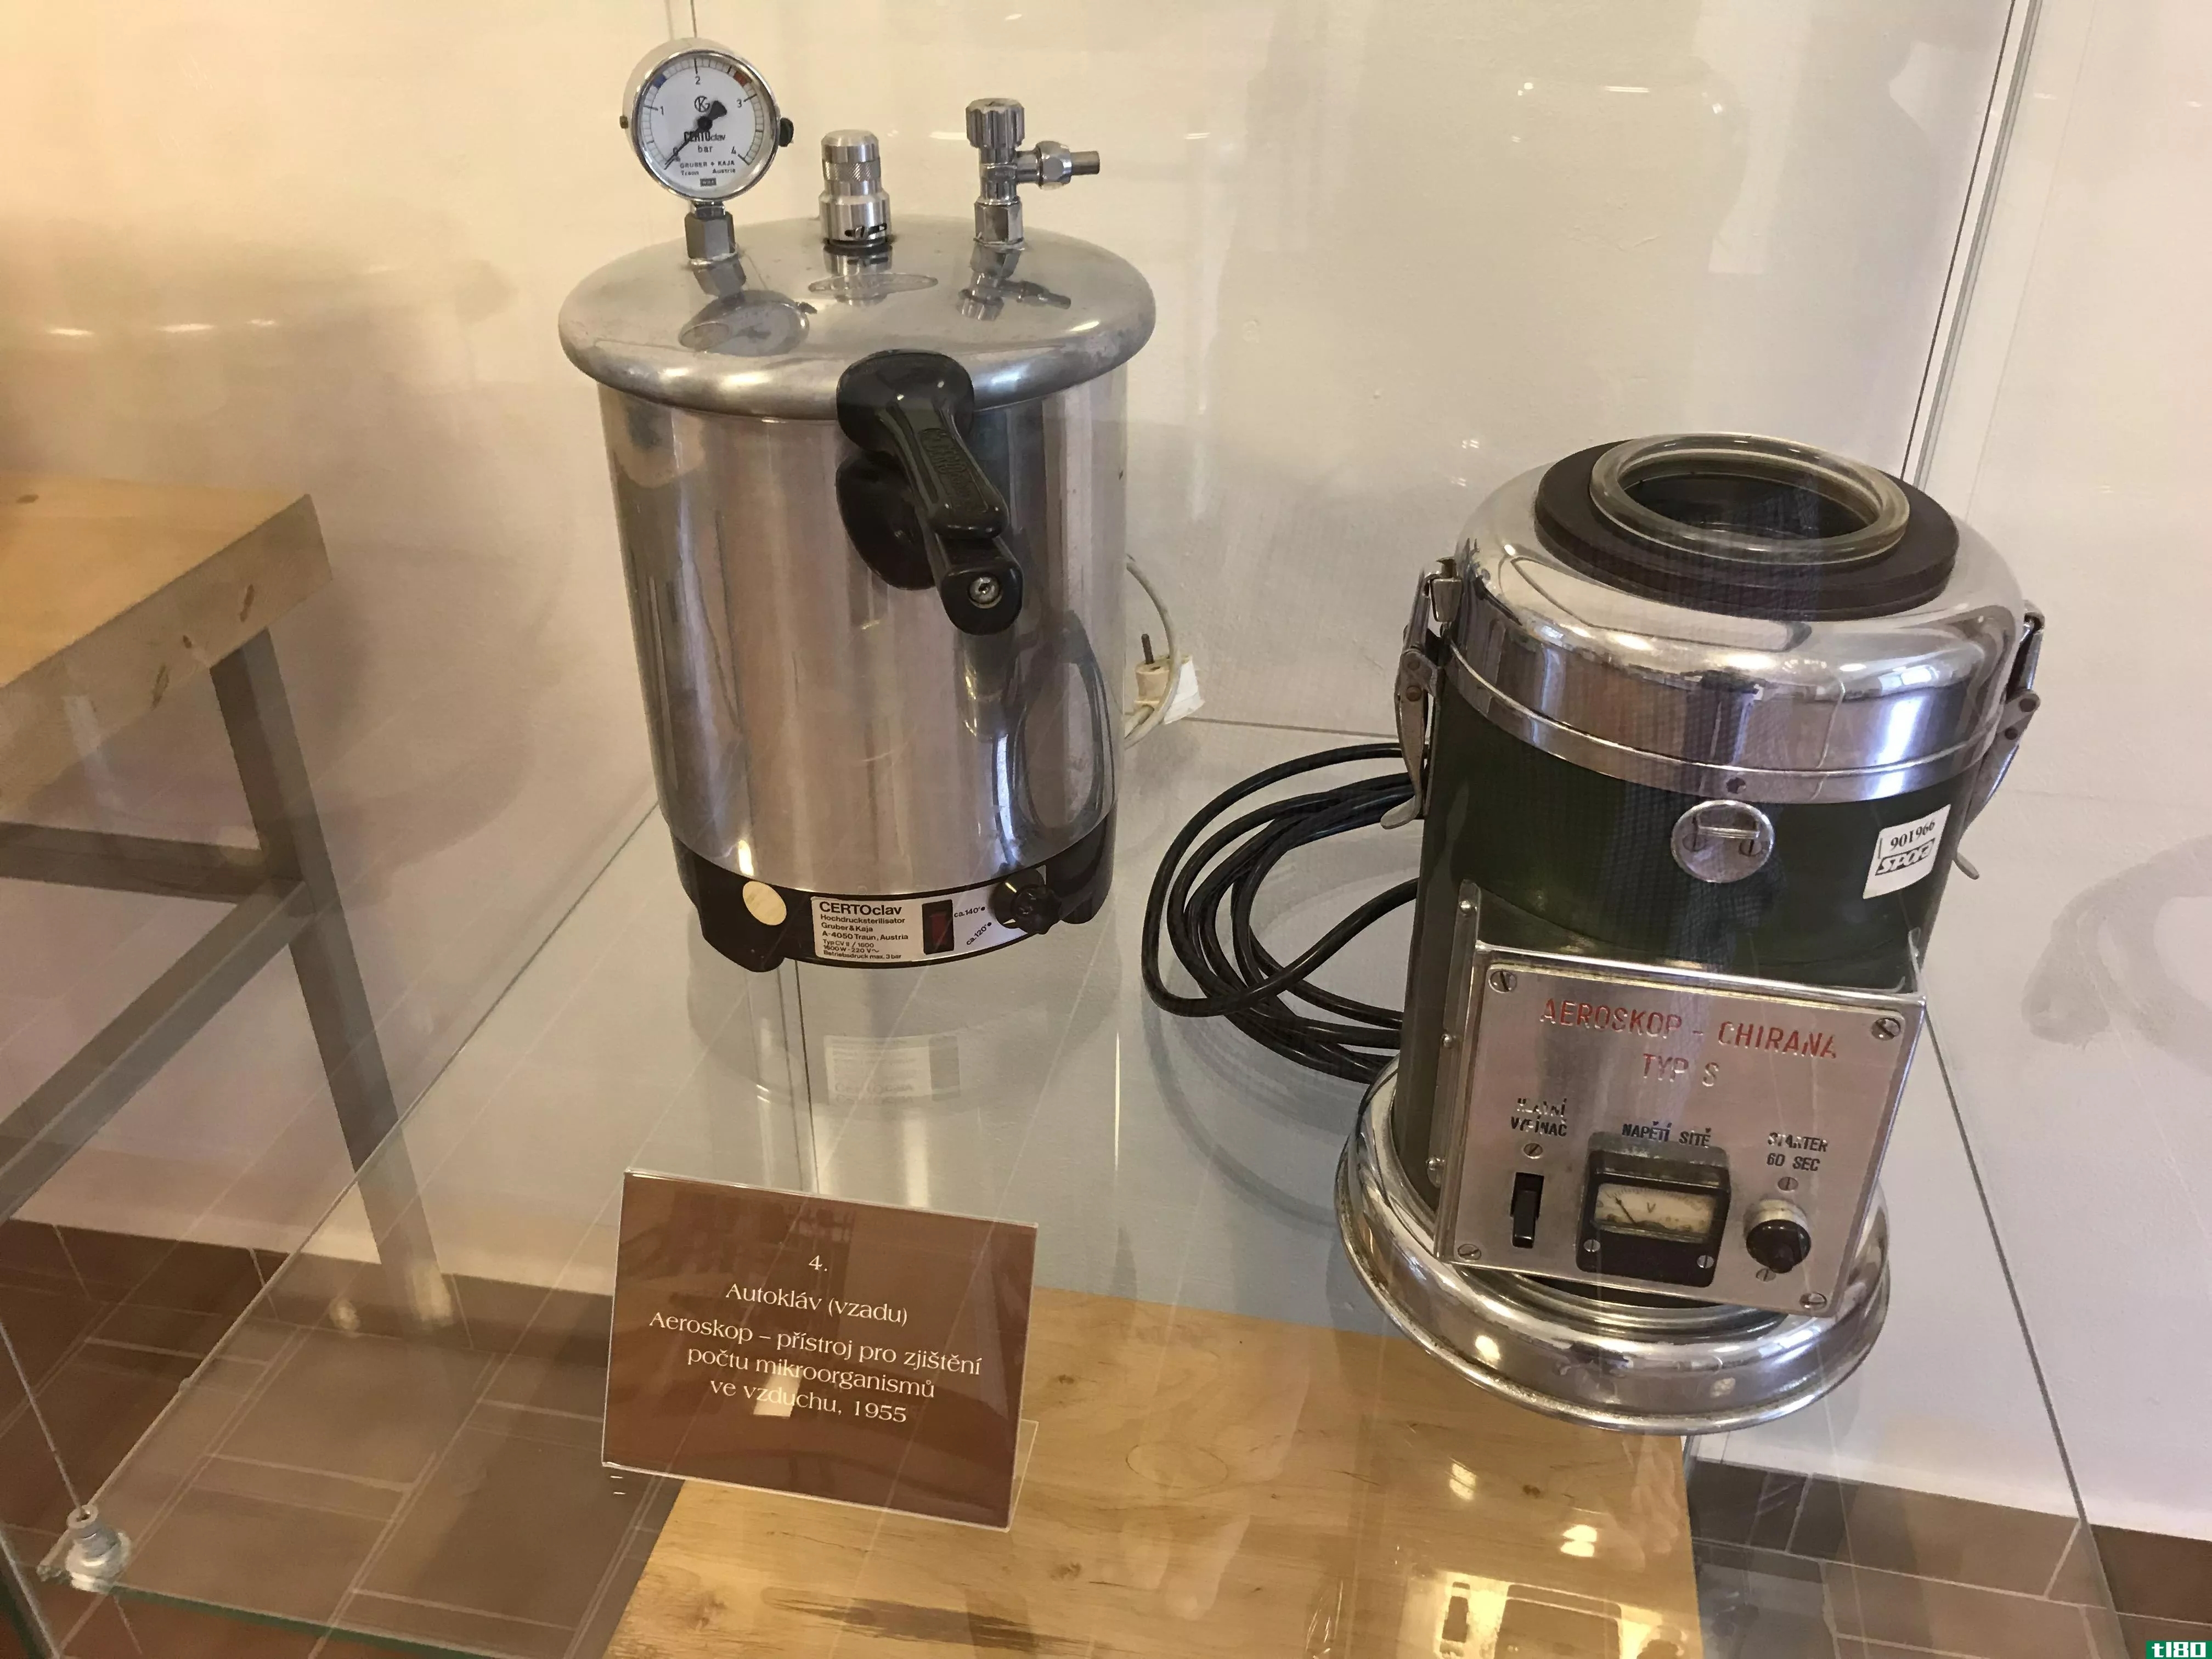 高压灭菌器(autoclave)和高压锅(pressure cooker)的区别